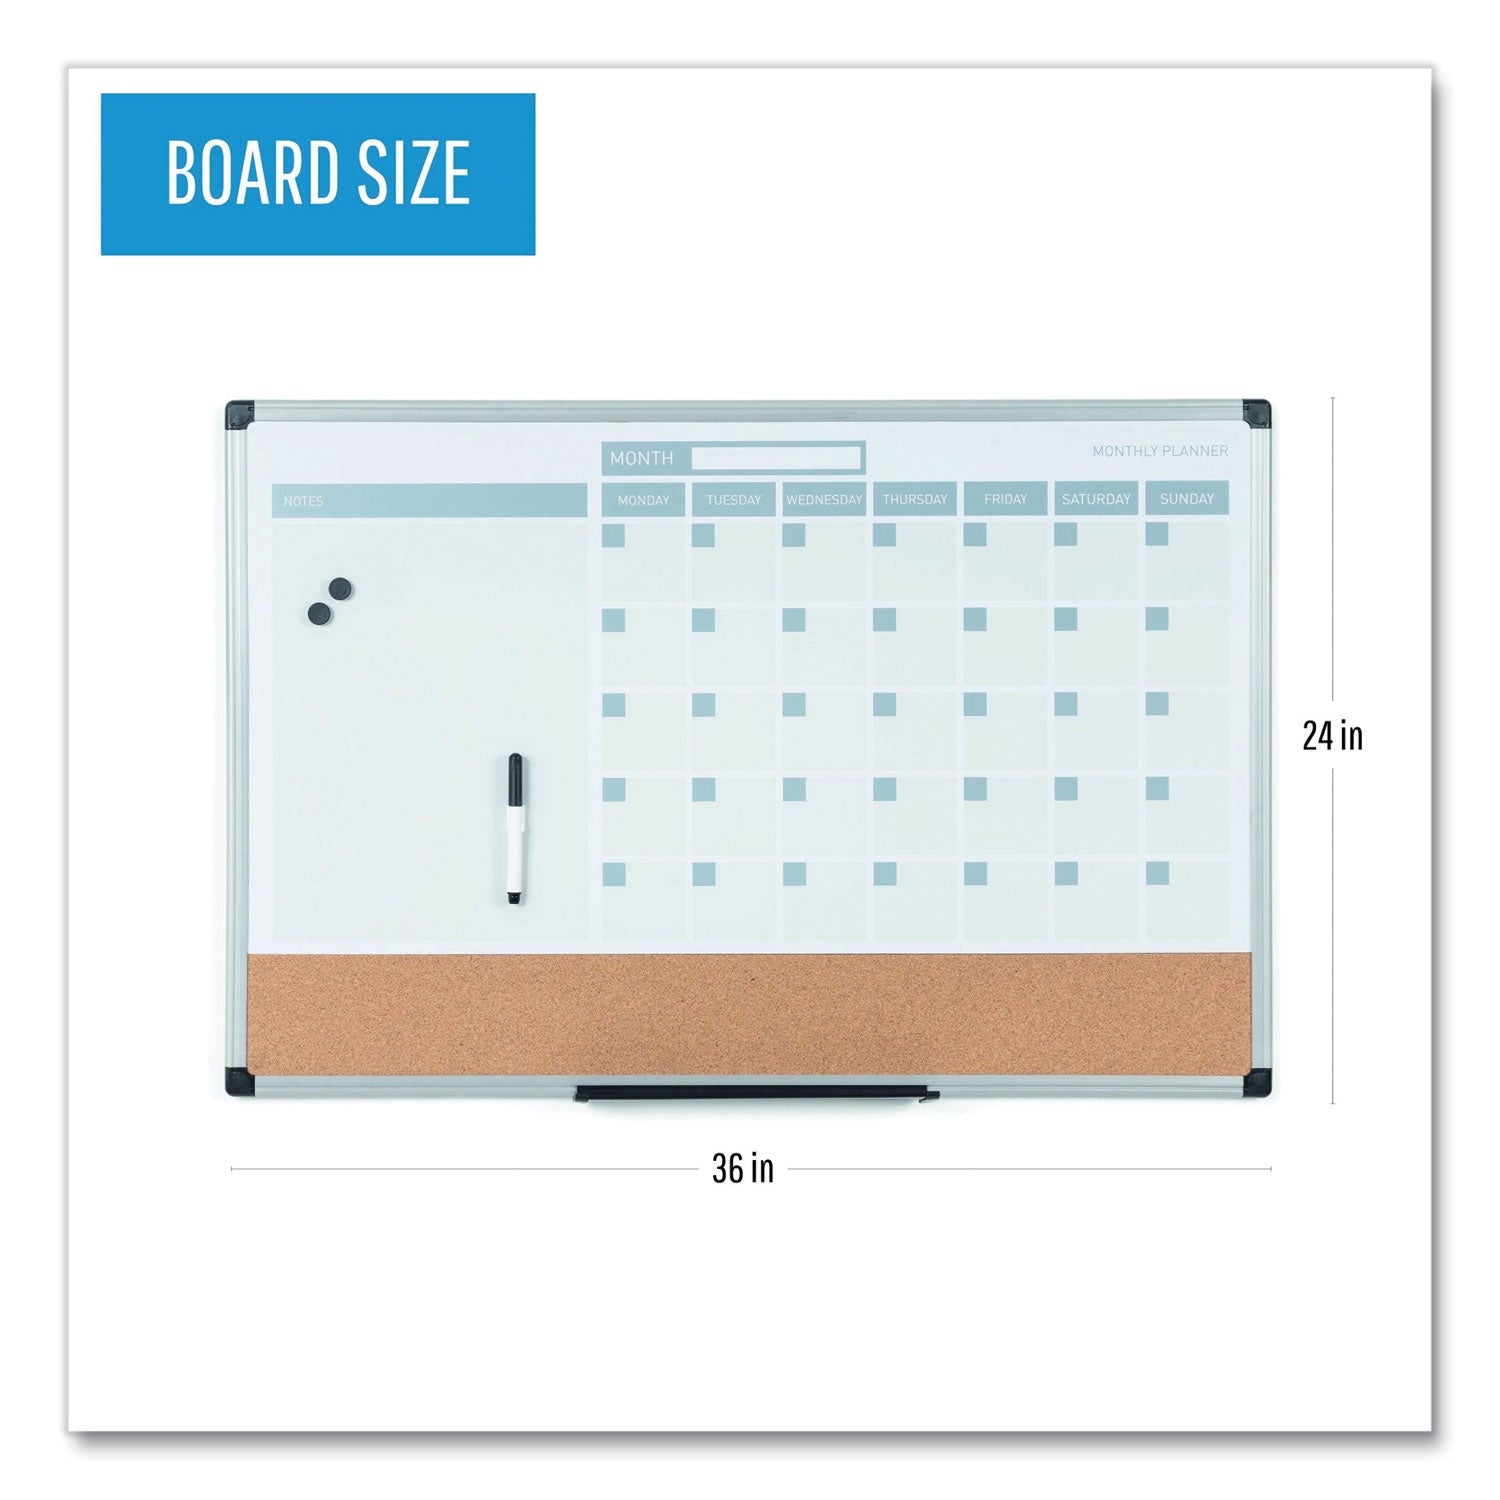 3-in-1 Calendar Planner, 36 x 24, White Surface, Silver Aluminum Frame - 